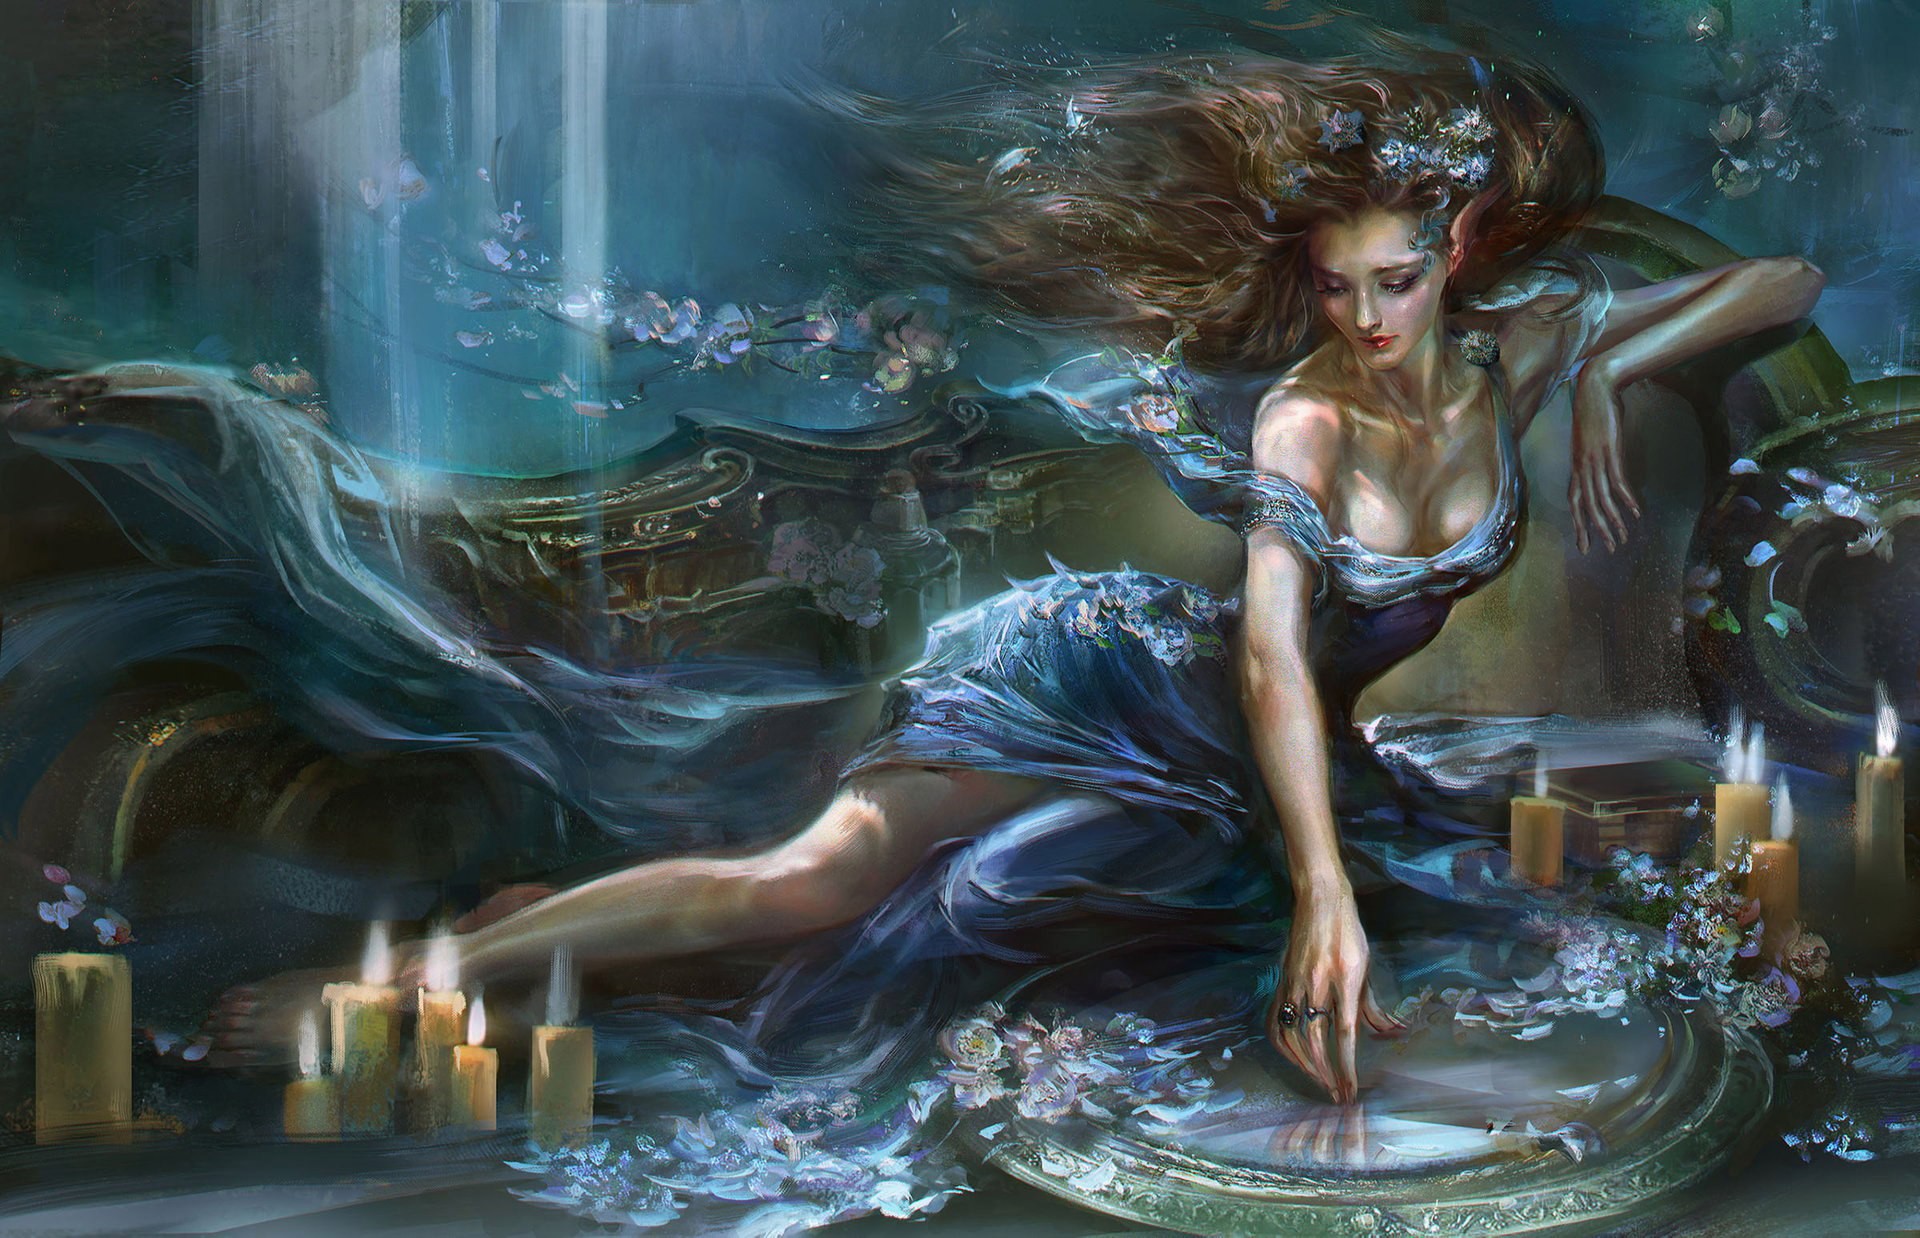 2965018-fantasy-girl-candles-fantasy-art-blue-dress-artwork___fantasy-wallpapers